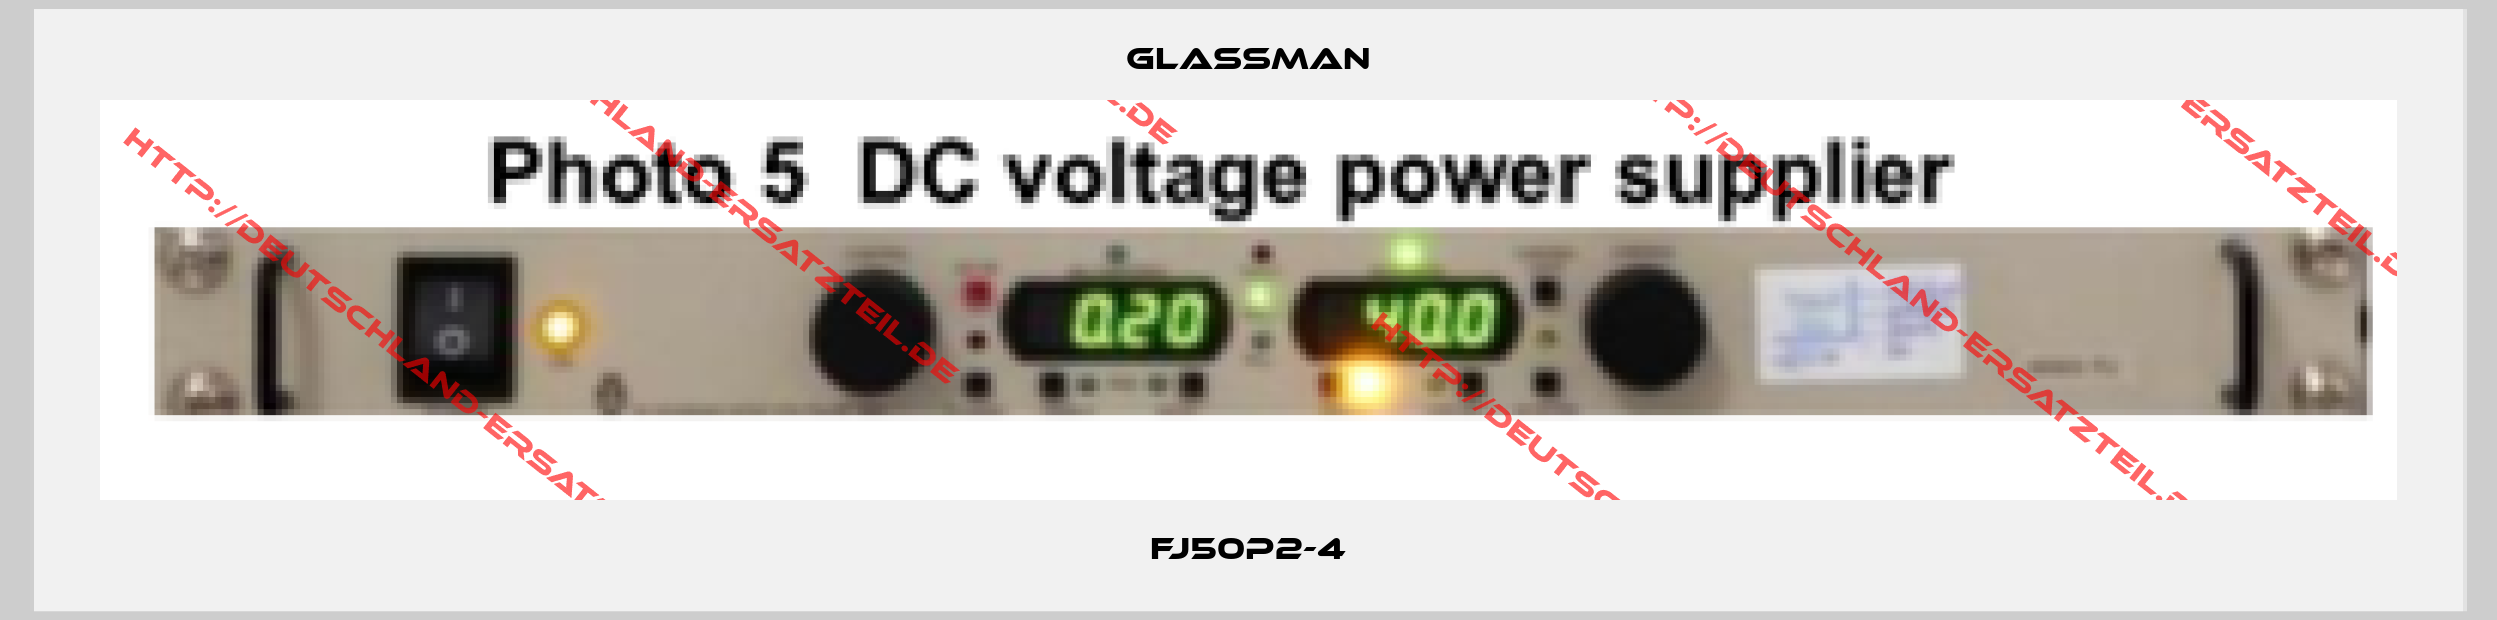 GLASSMAN-FJ50P2-4